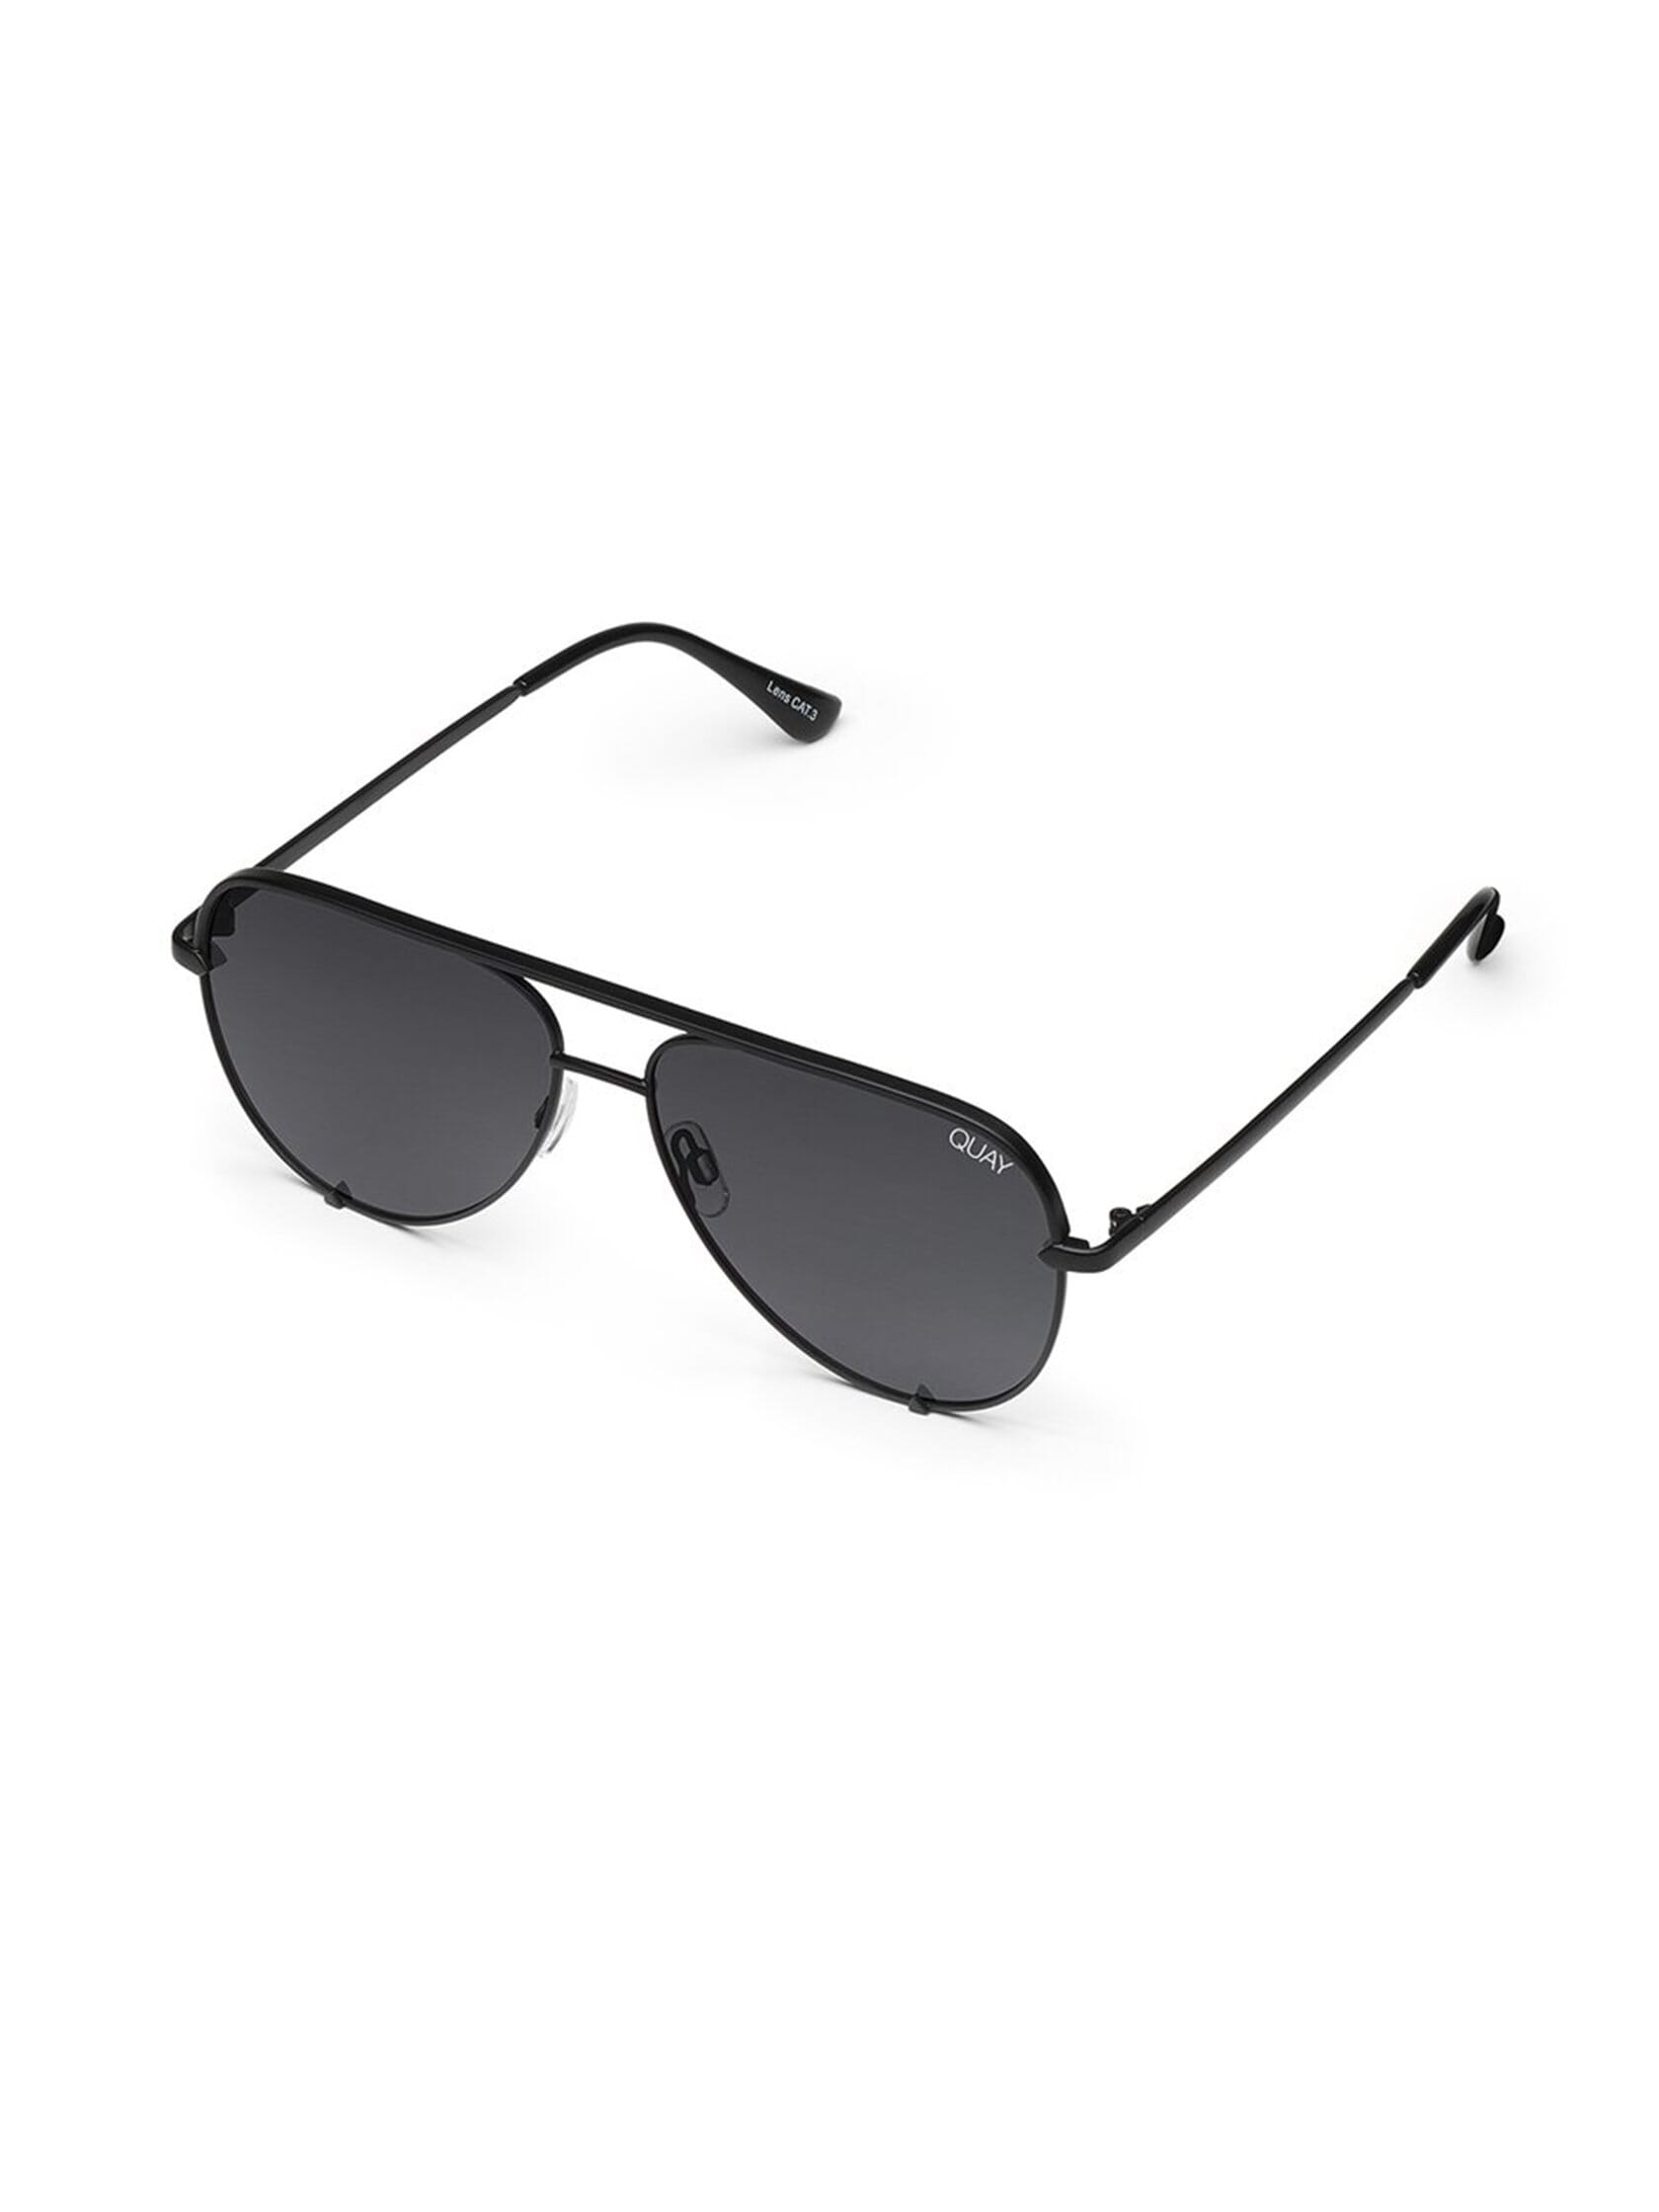 Quay Australia High Key Mini 57mm Aviator Sunglasses (Polarized) in Black/Smoke